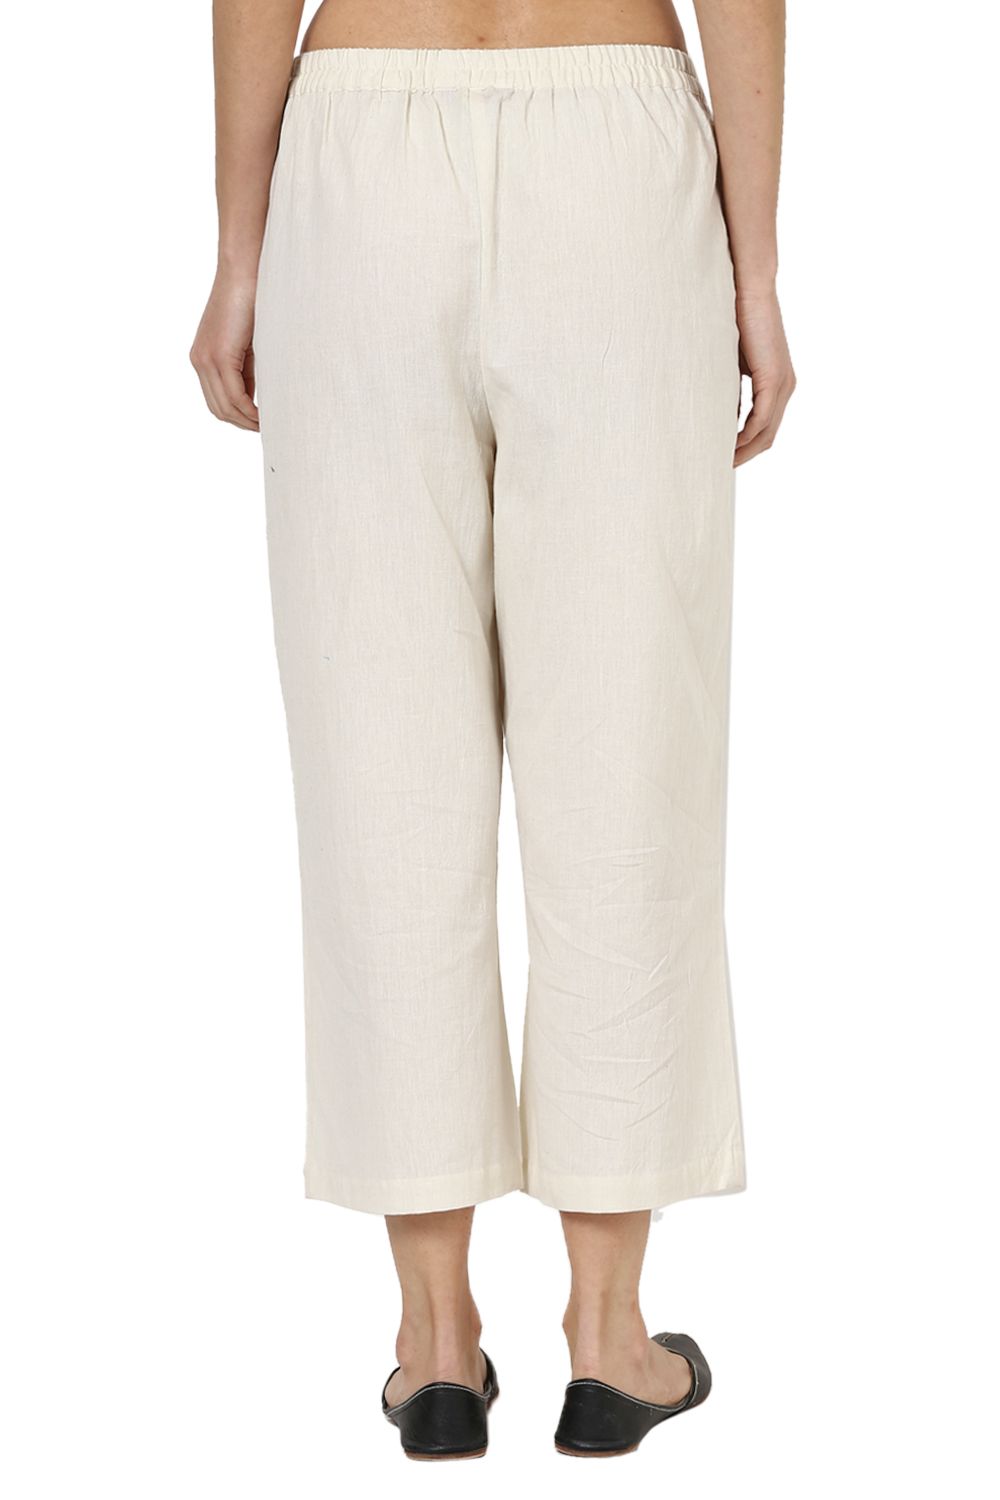 Off White Cotton Short Slim Pants image number 3